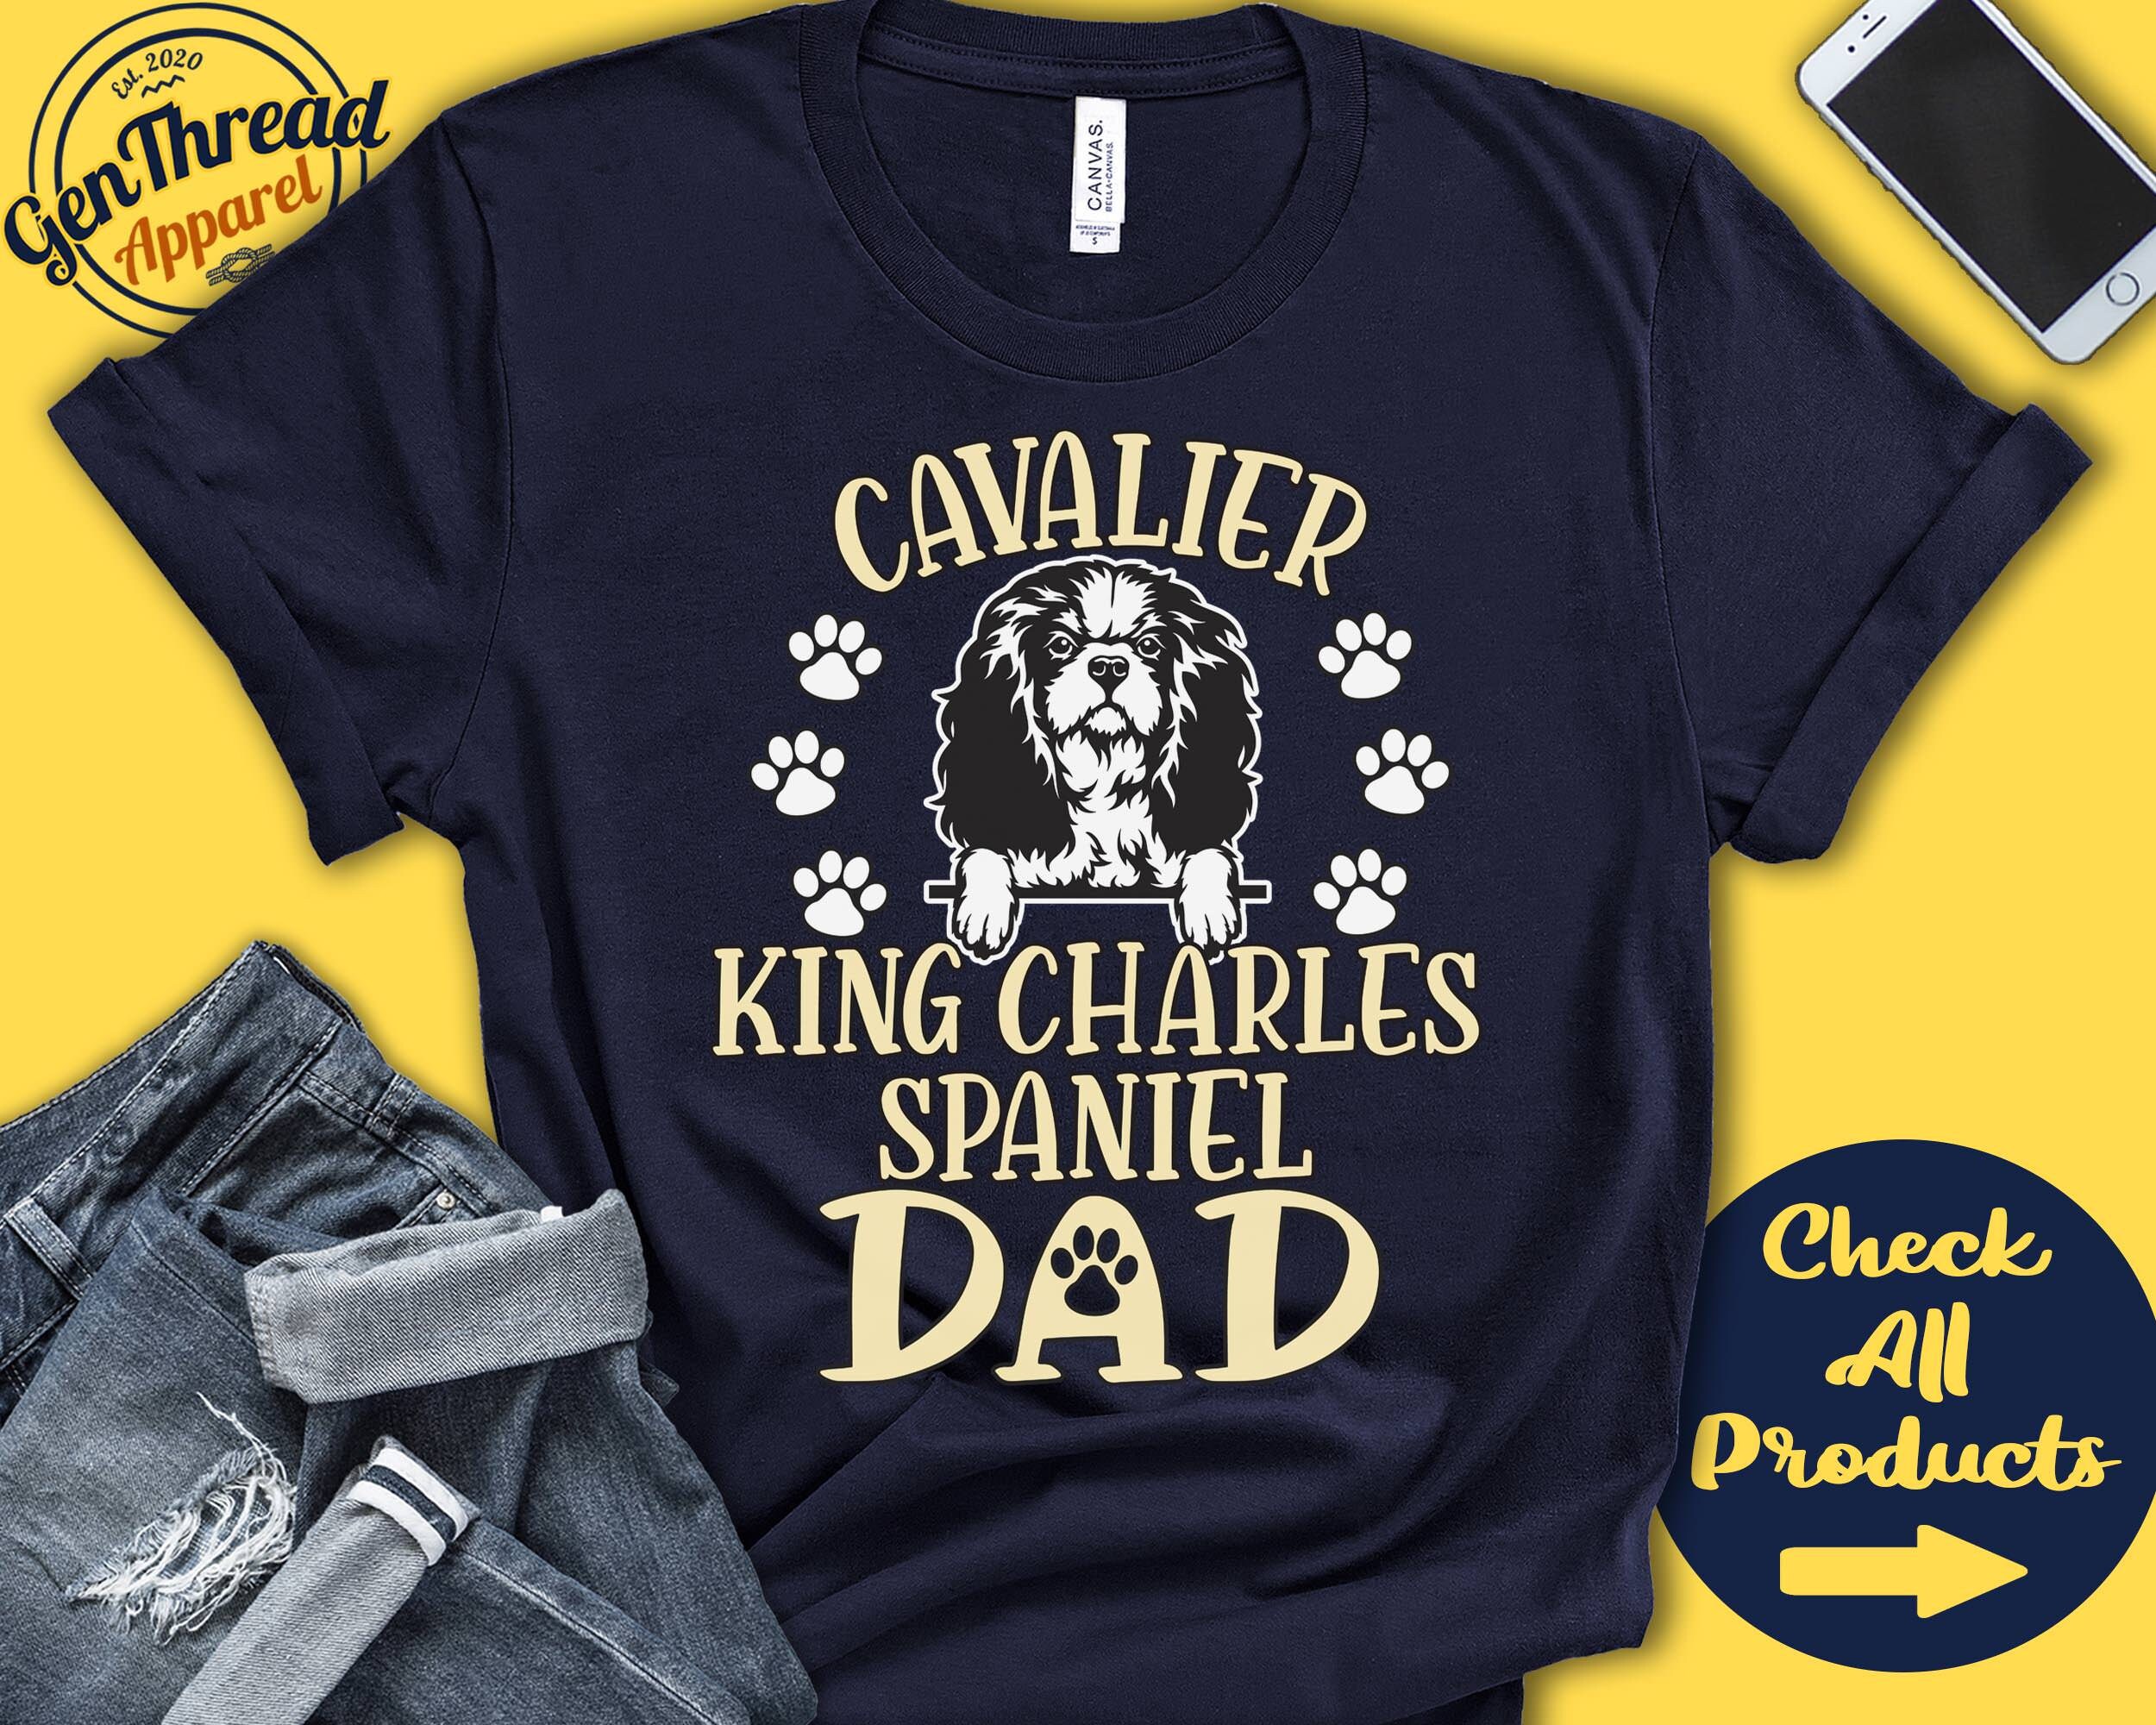 Cavalier King Charles Mum Illustration: Classic T-Shirt